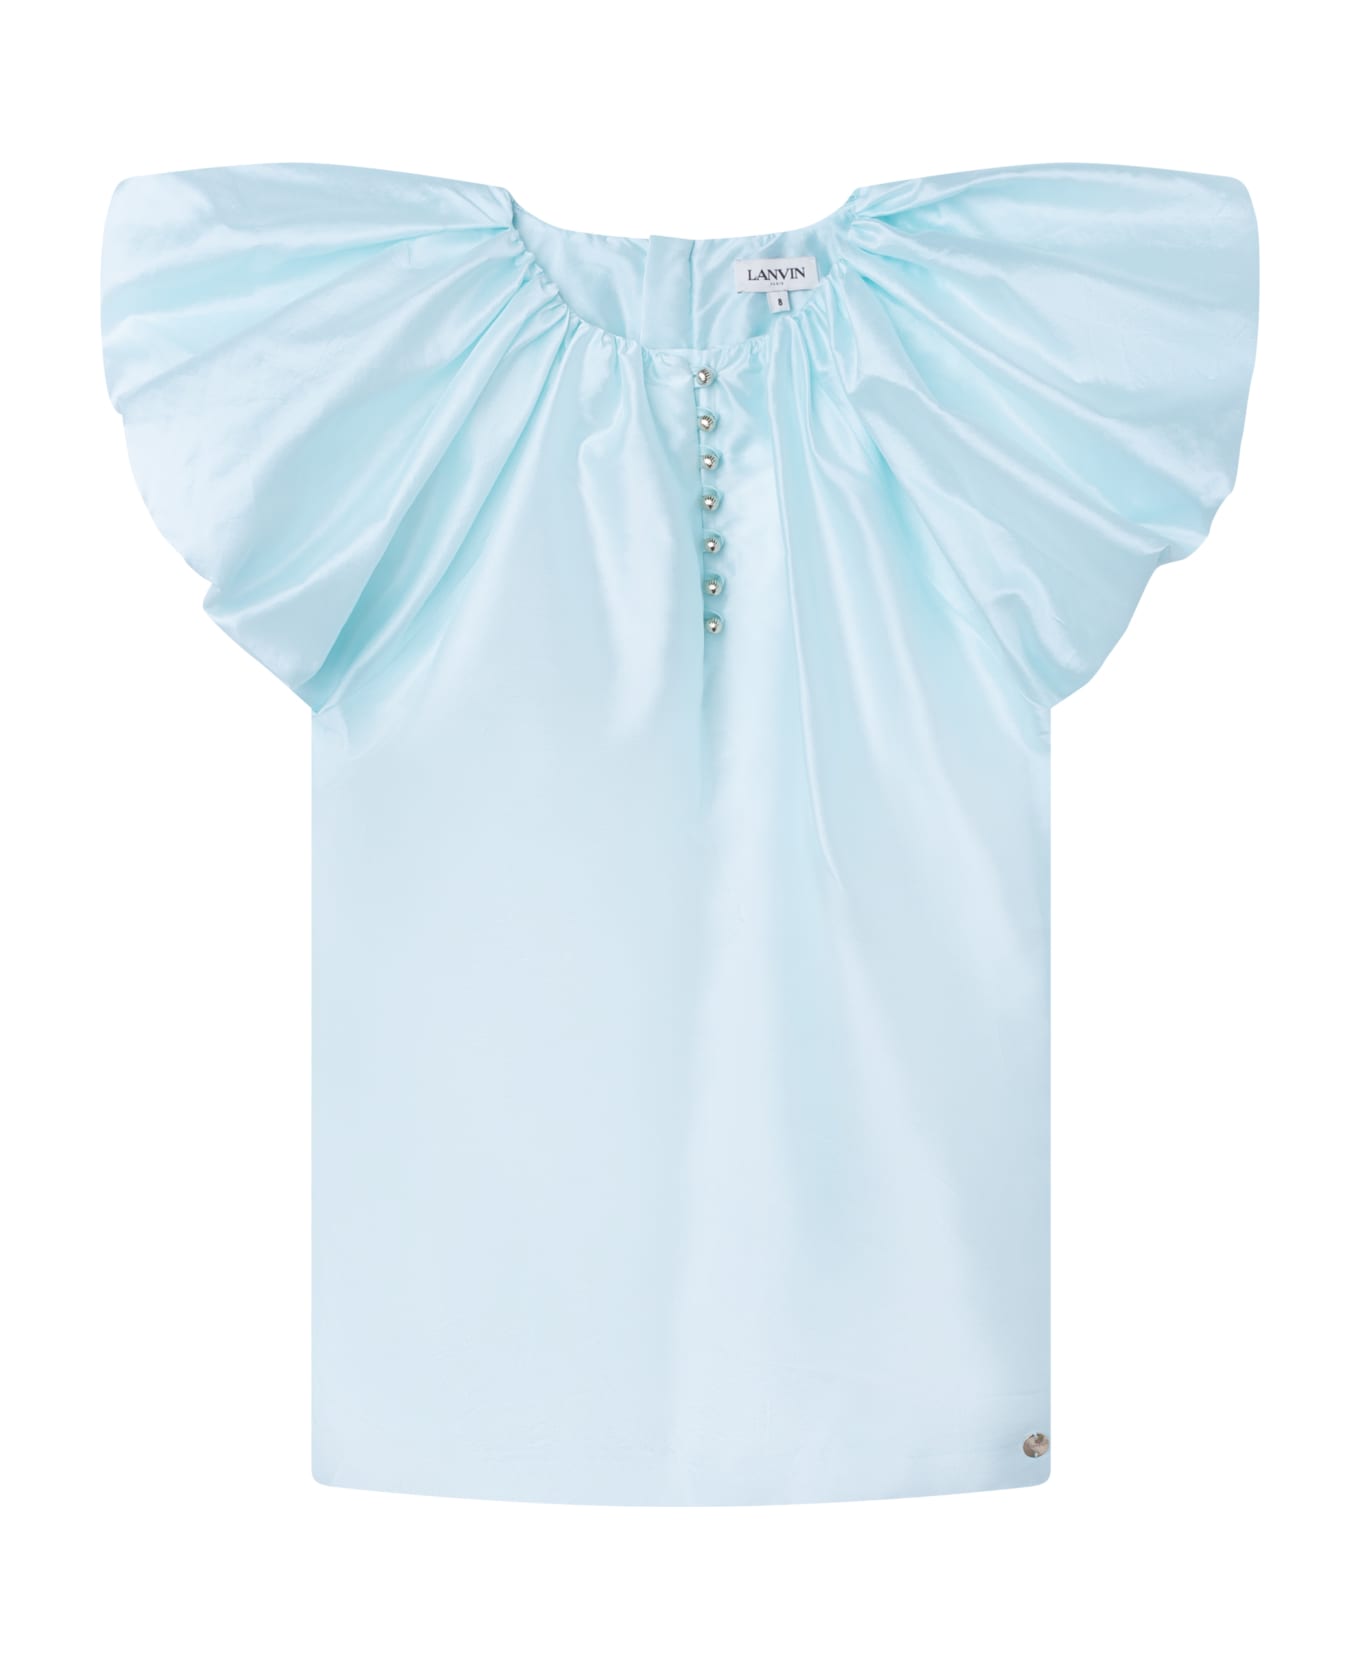 Lanvin Dress With Balloon Sleeves - Light blue ワンピース＆ドレス